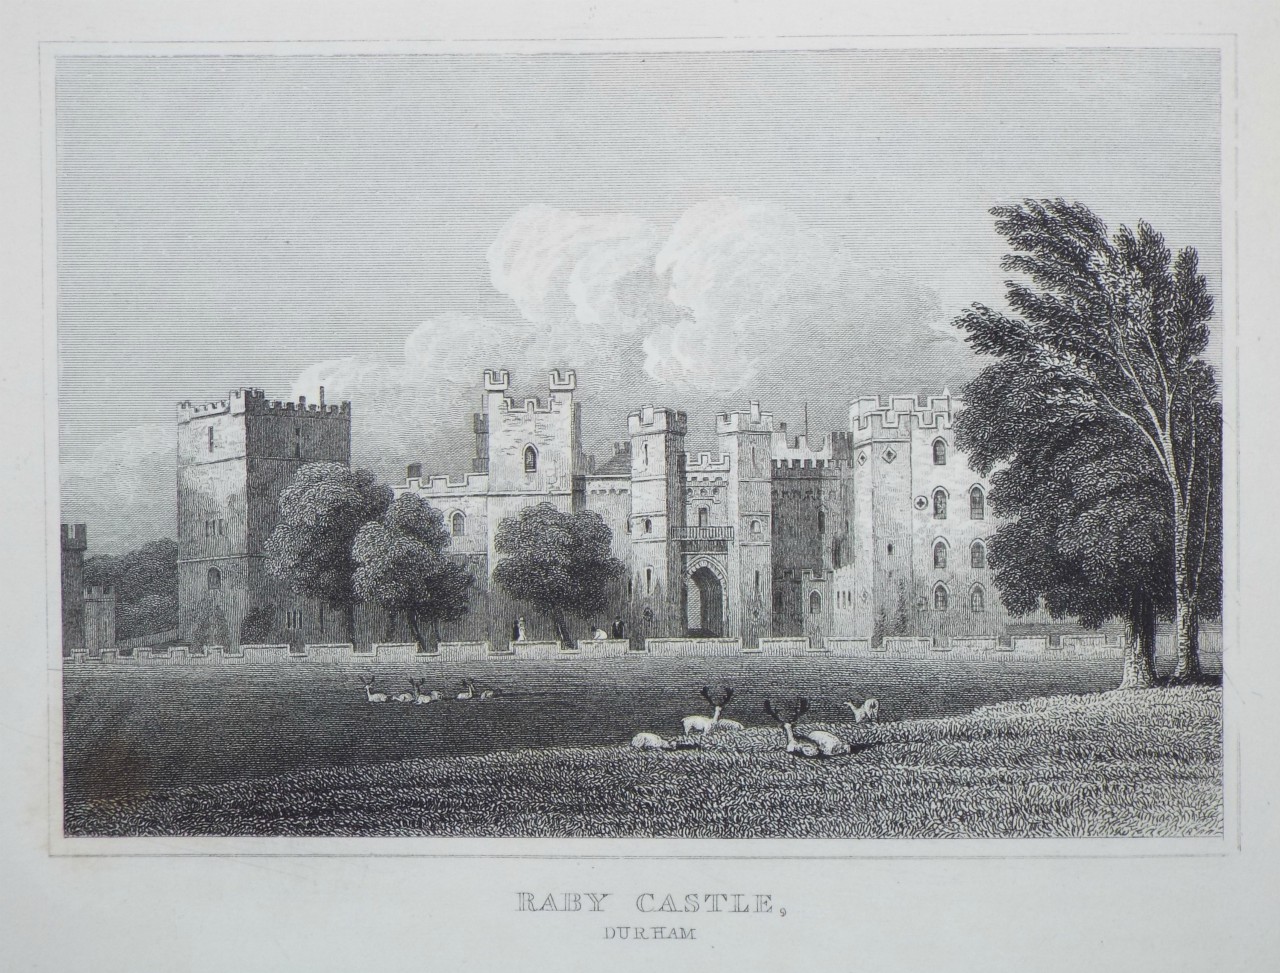 Print - Raby Castle, Durham. - Radclyffe